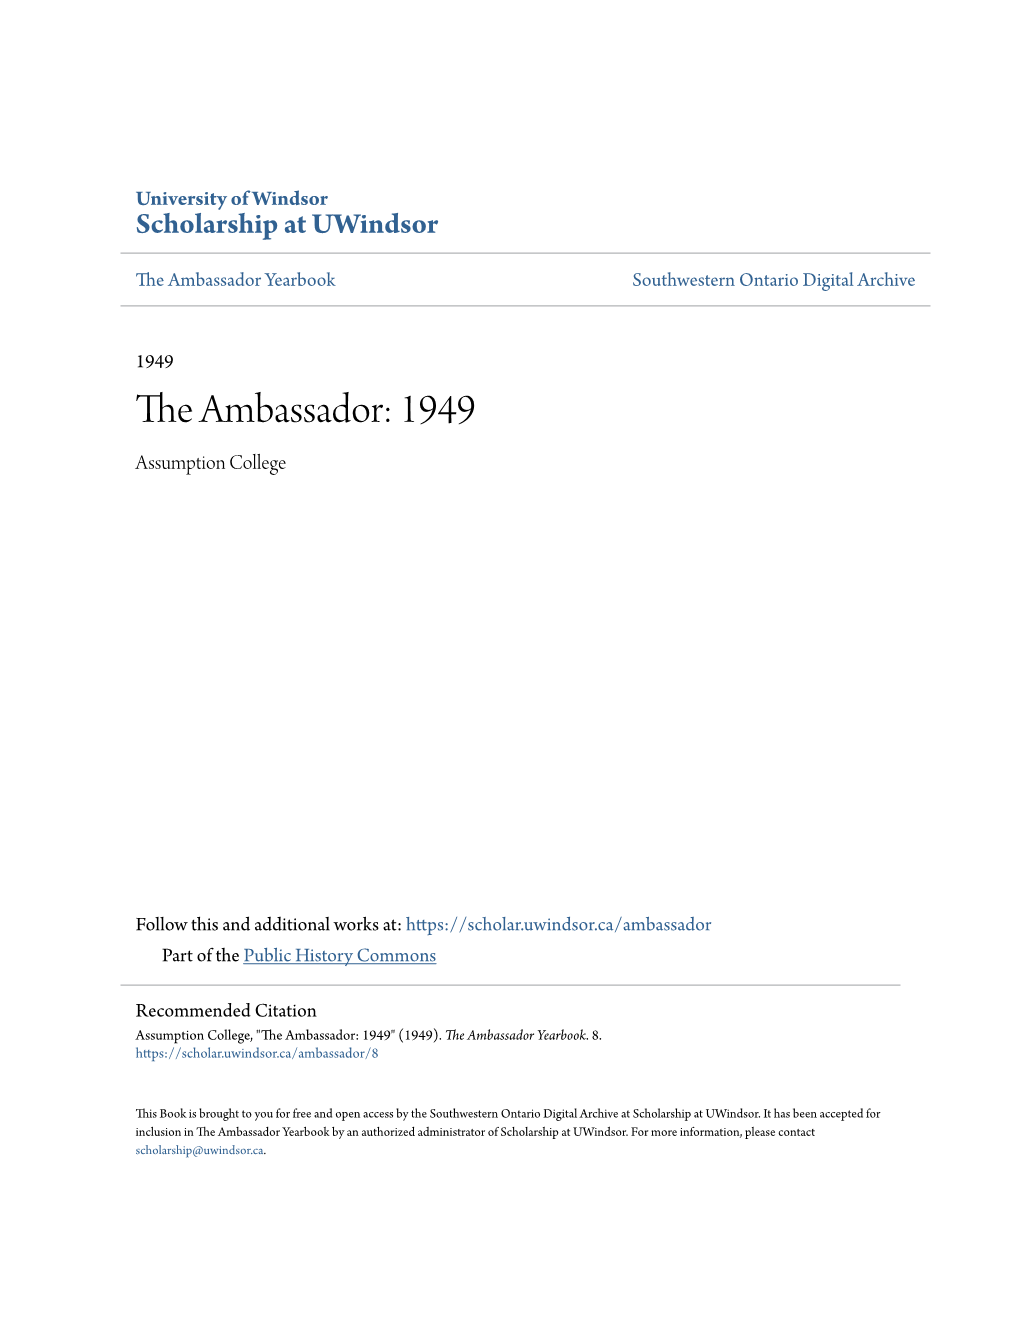 The Ambassador: 1949 Assumption College